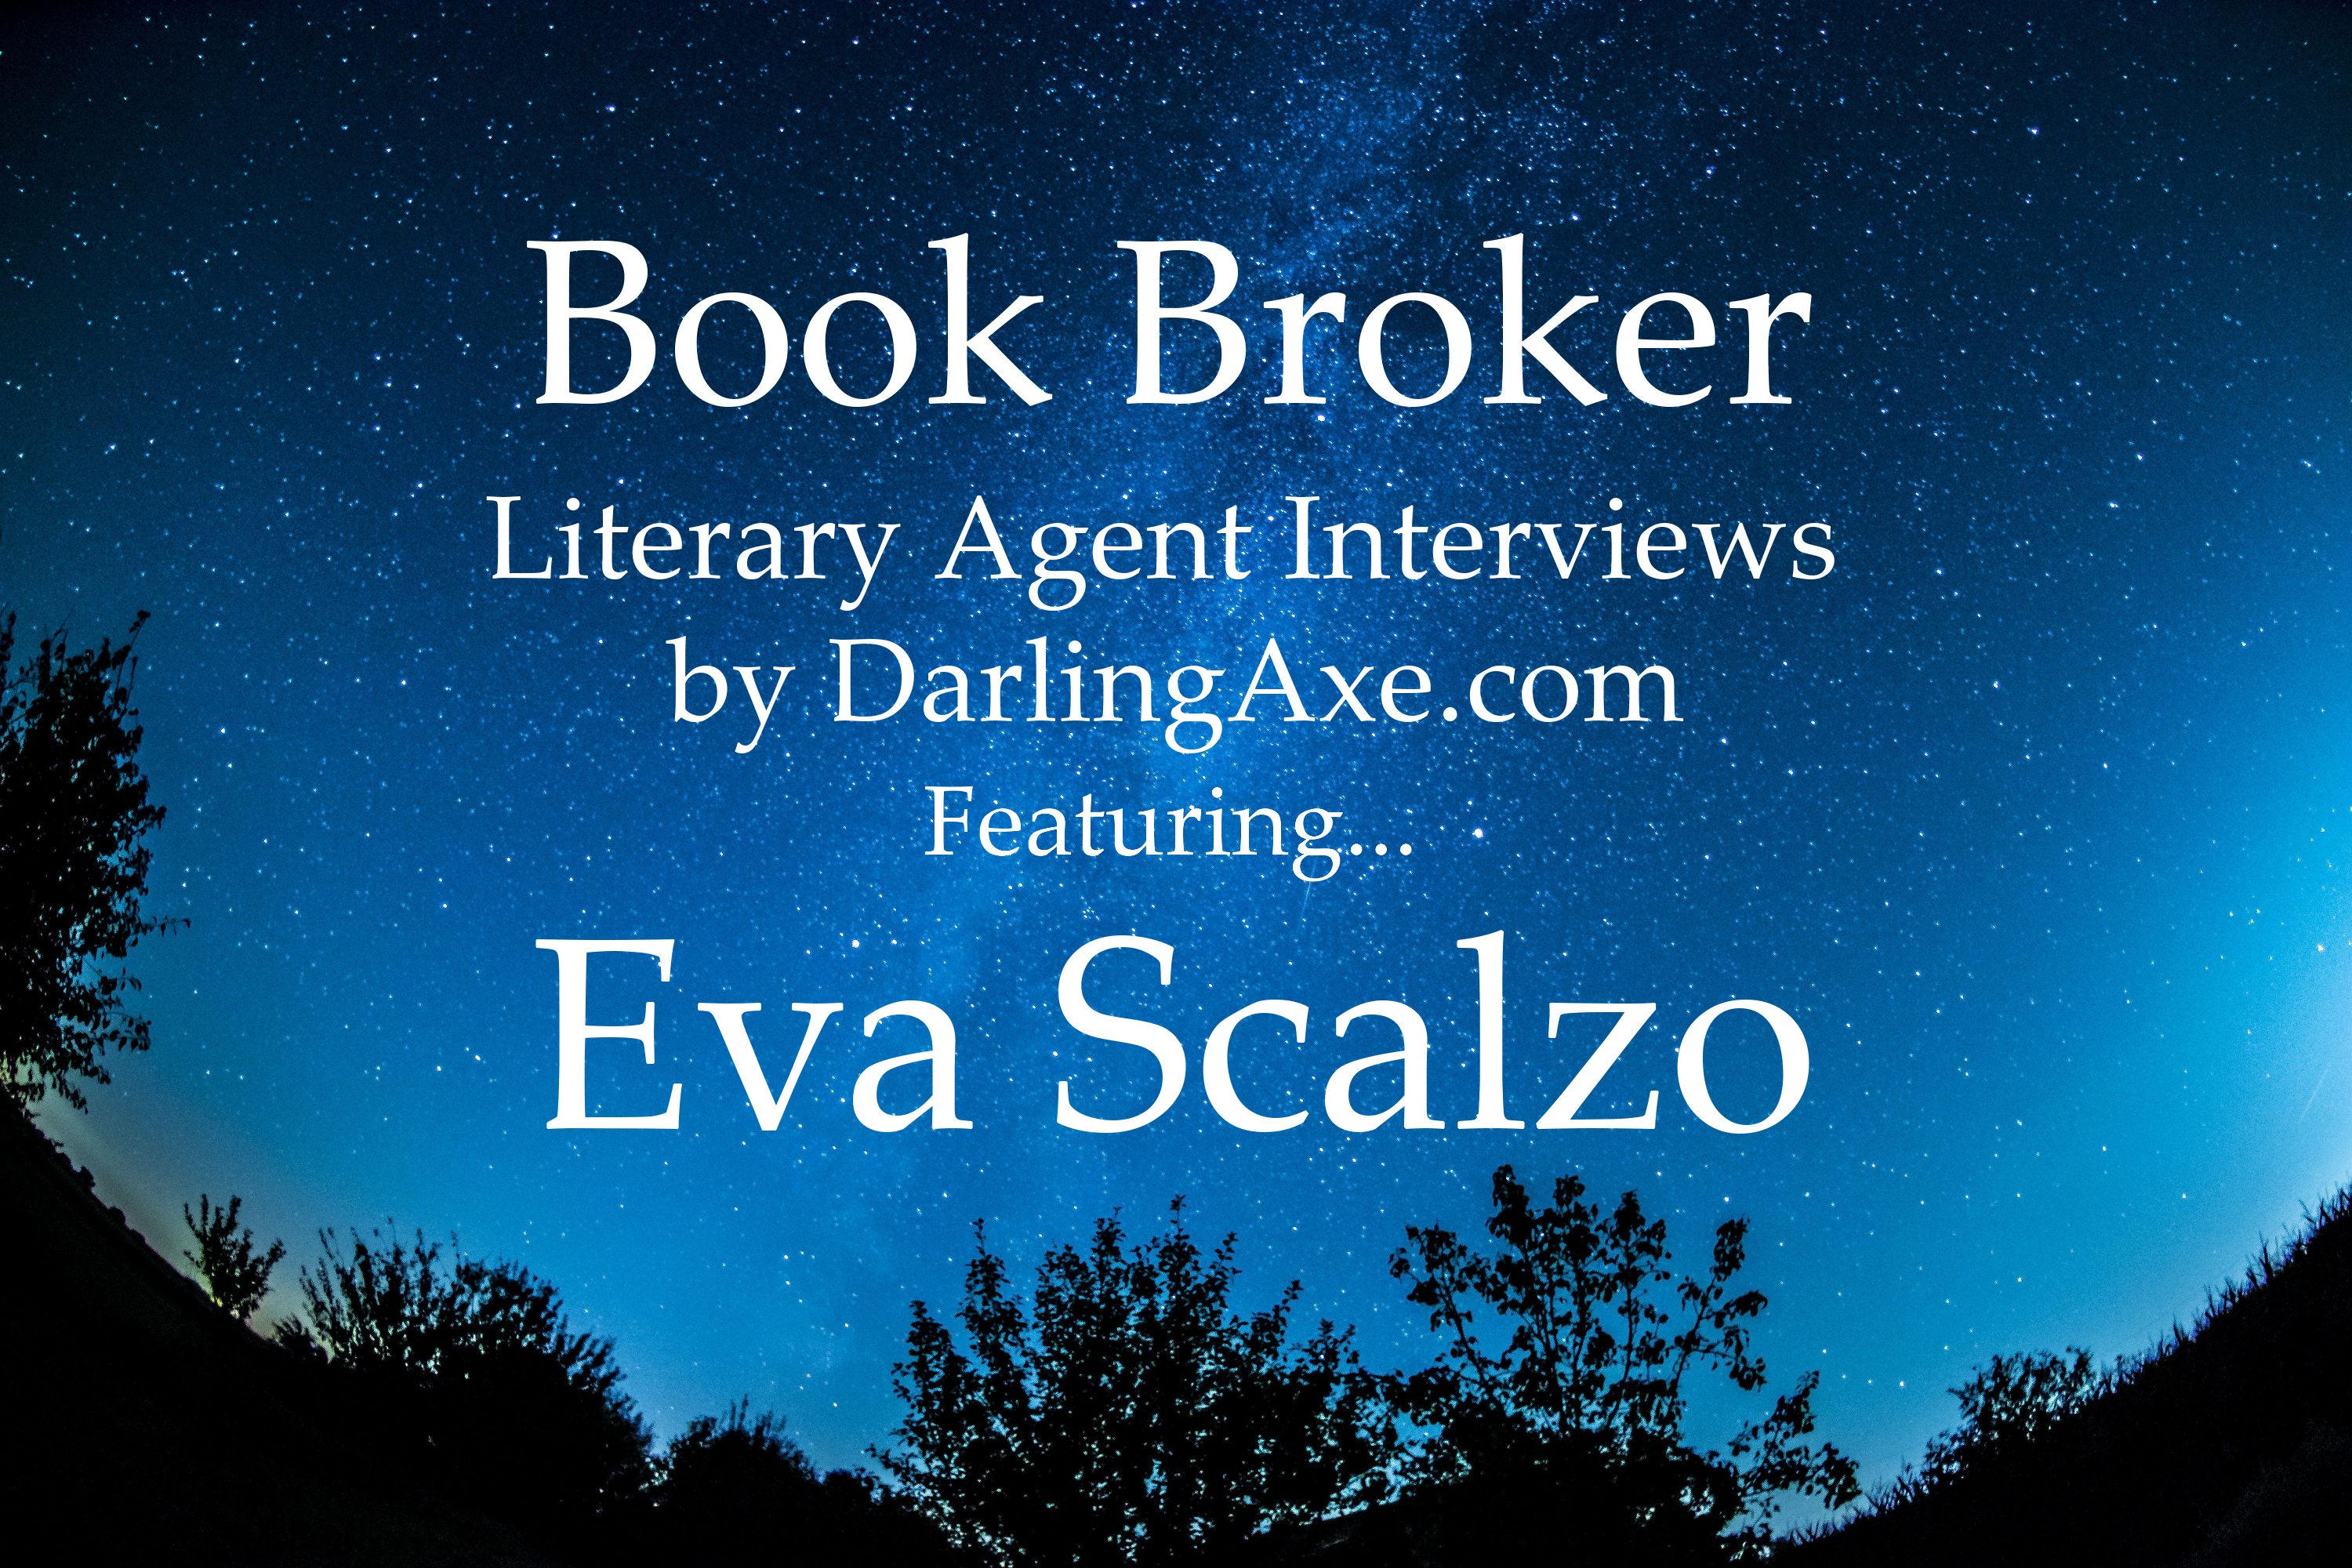 Book Broker: an interview with Eva Scalzo